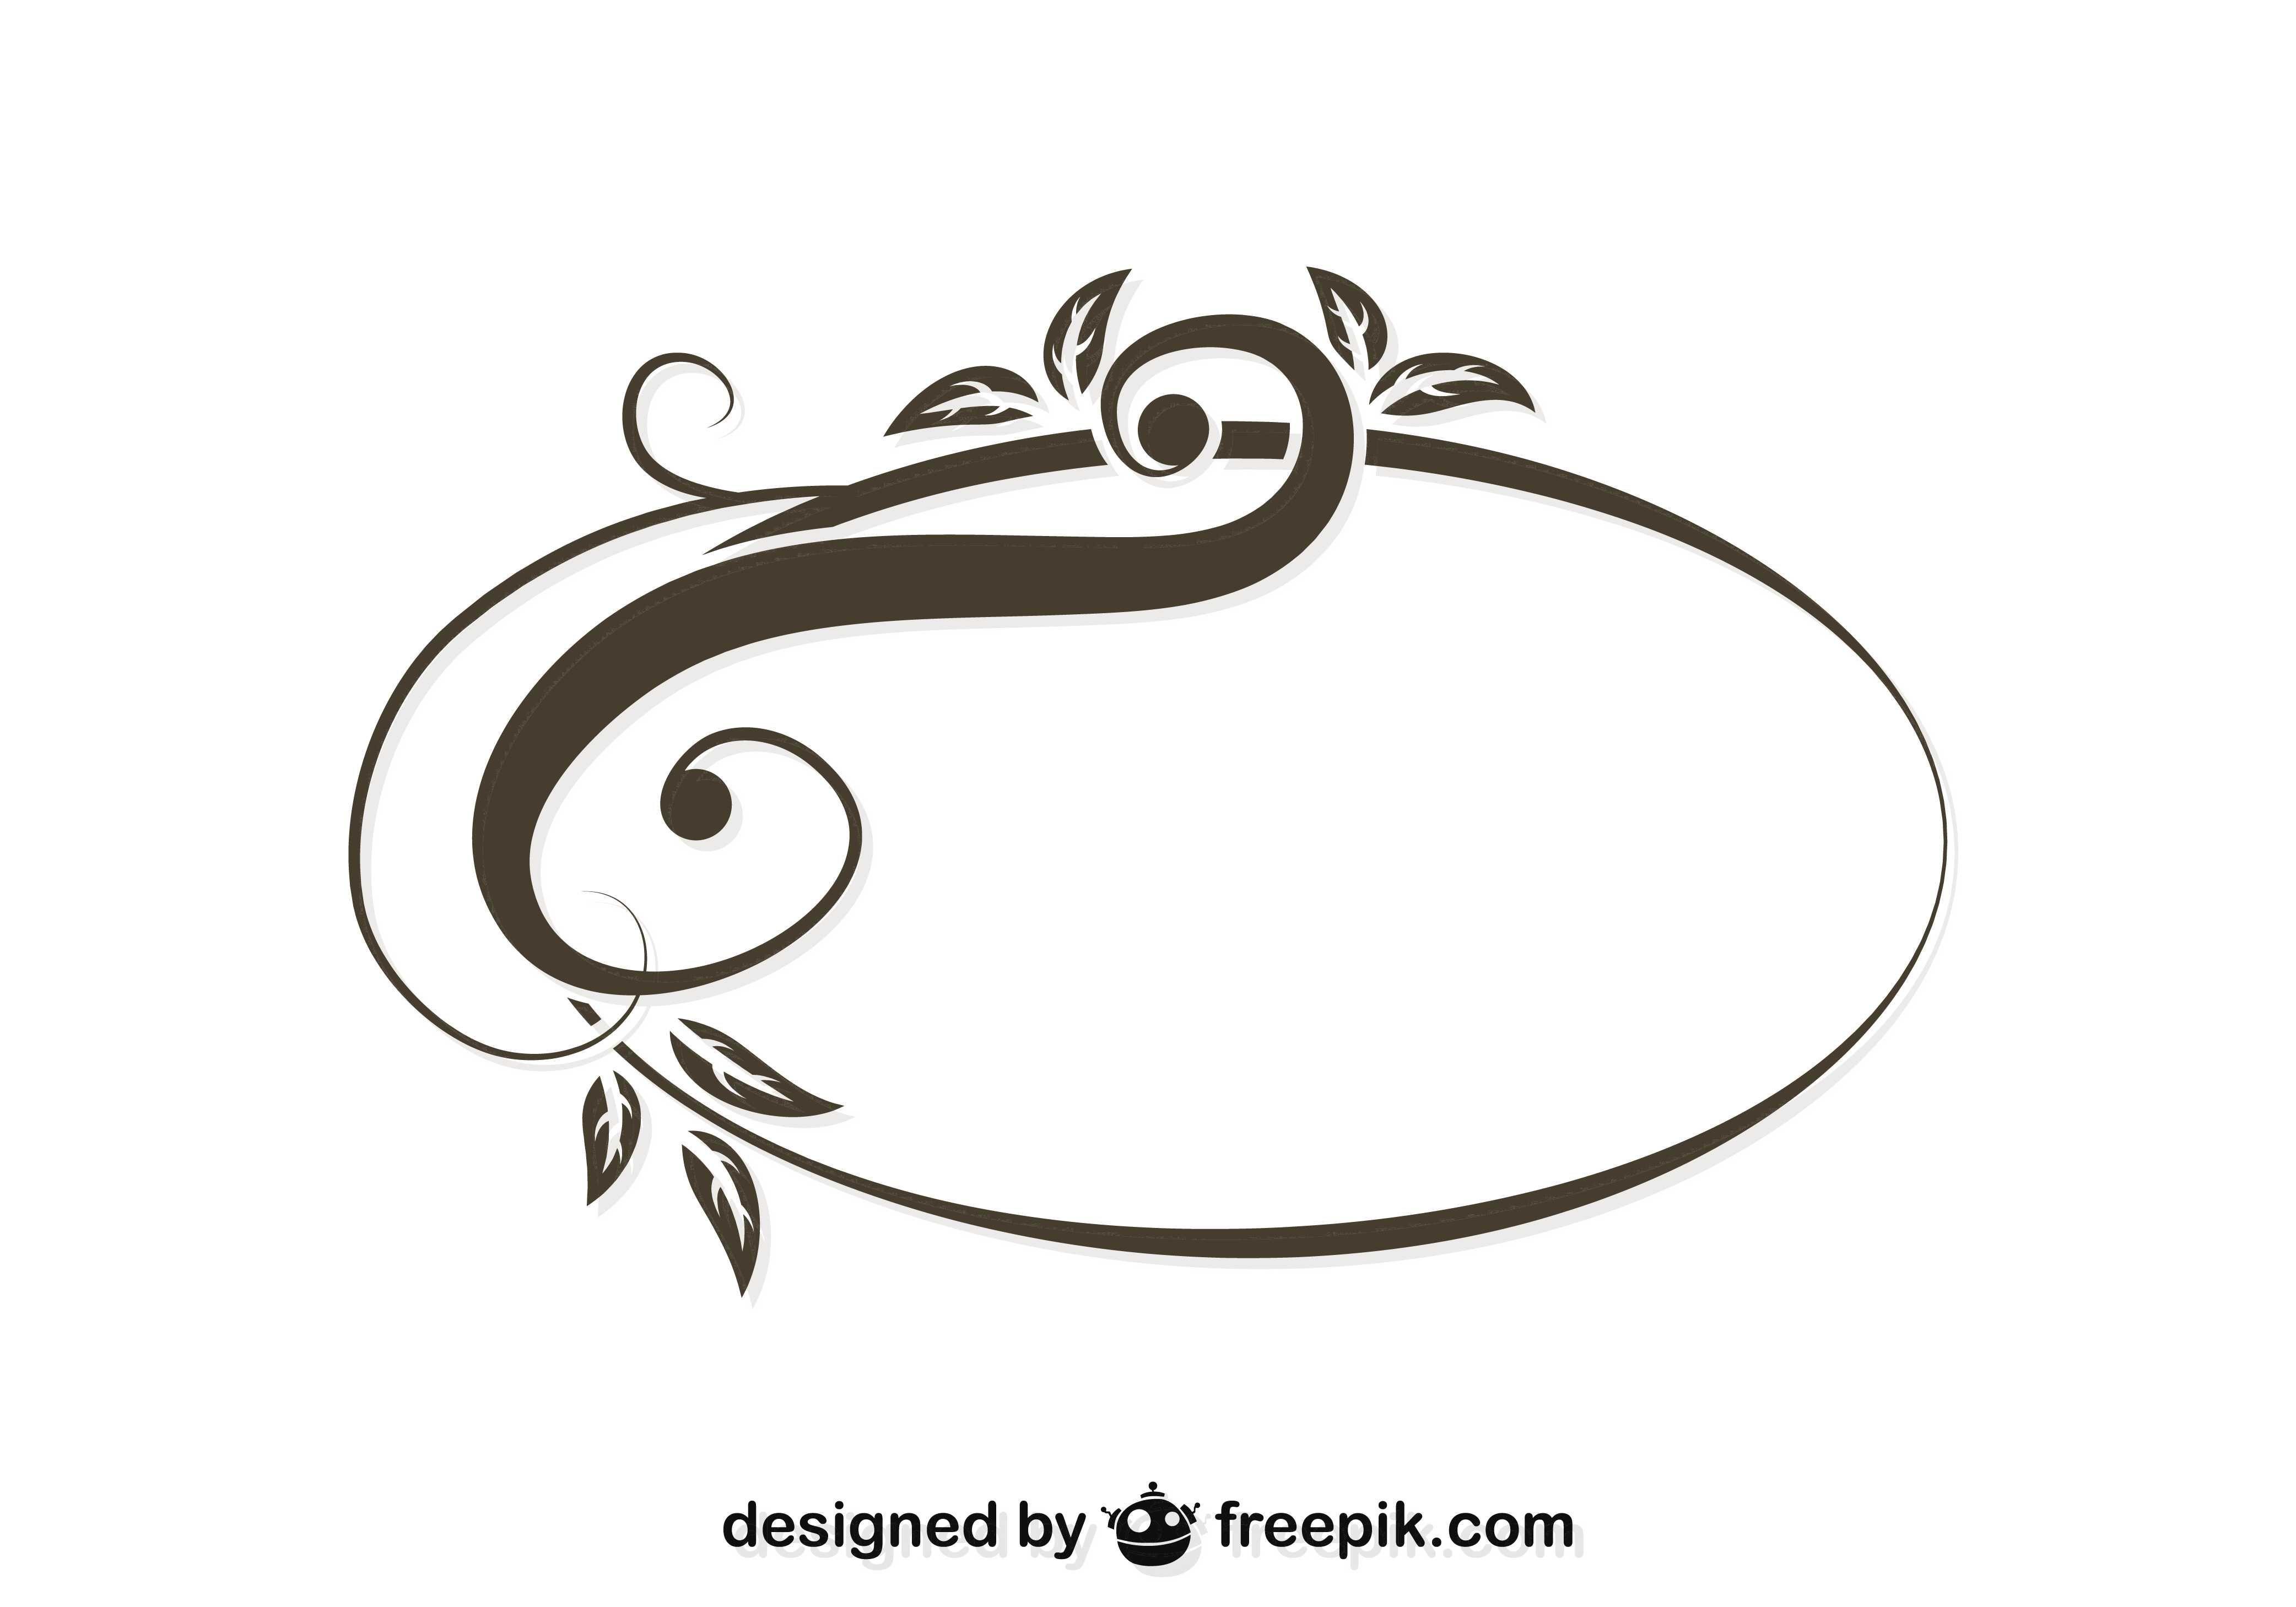 Oval Swirl Logo - LogoDix